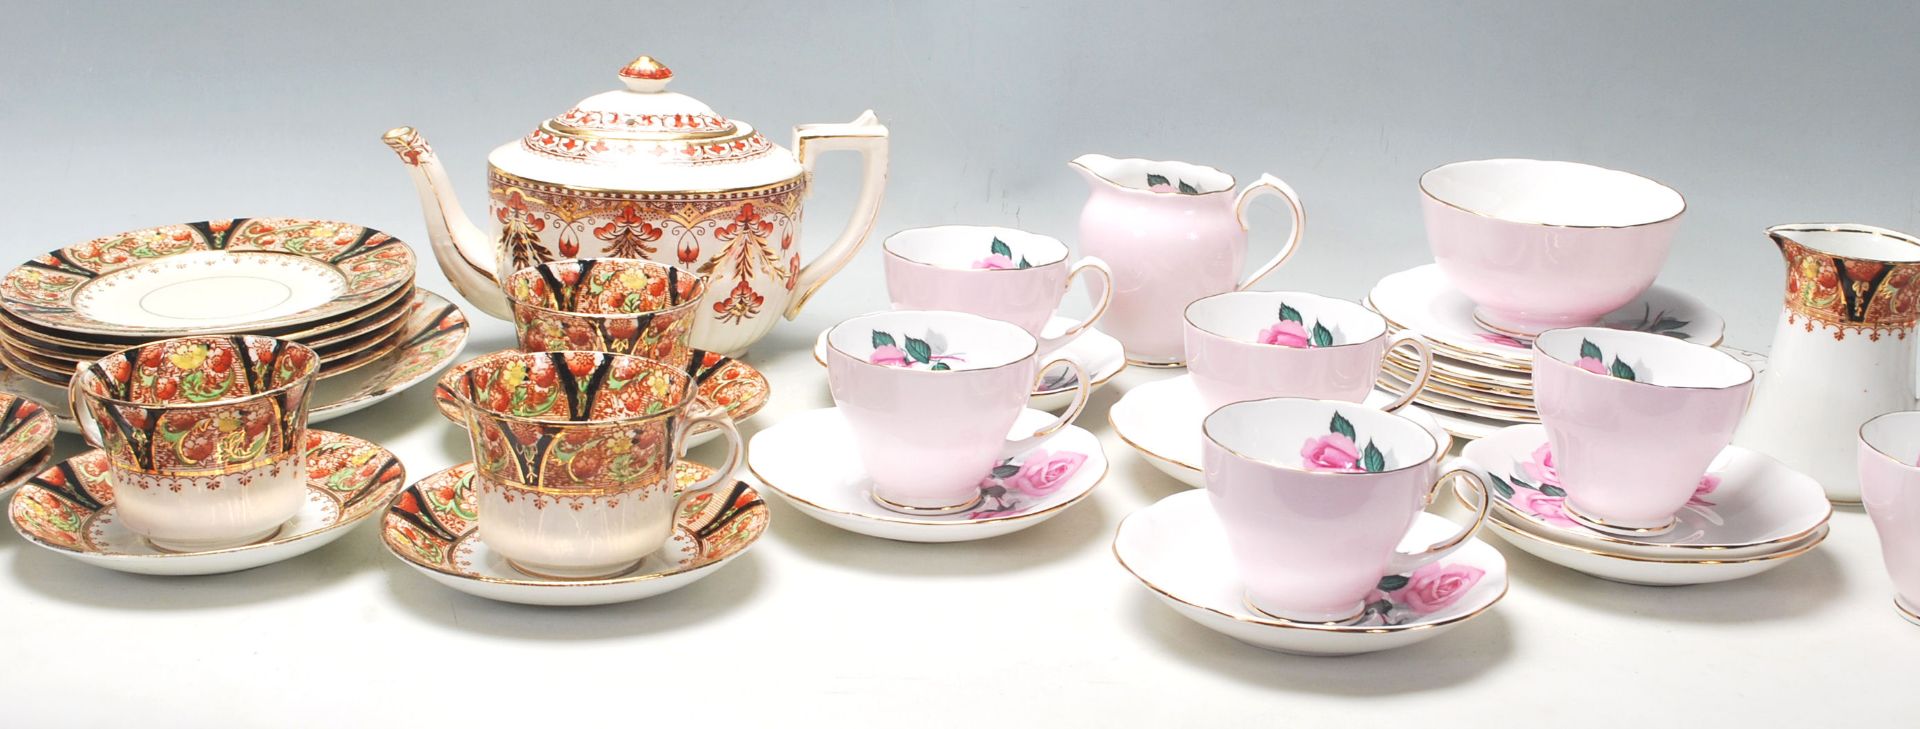 Two vintage retro English china tea sets to include a Park Place china Imari pattern tea set